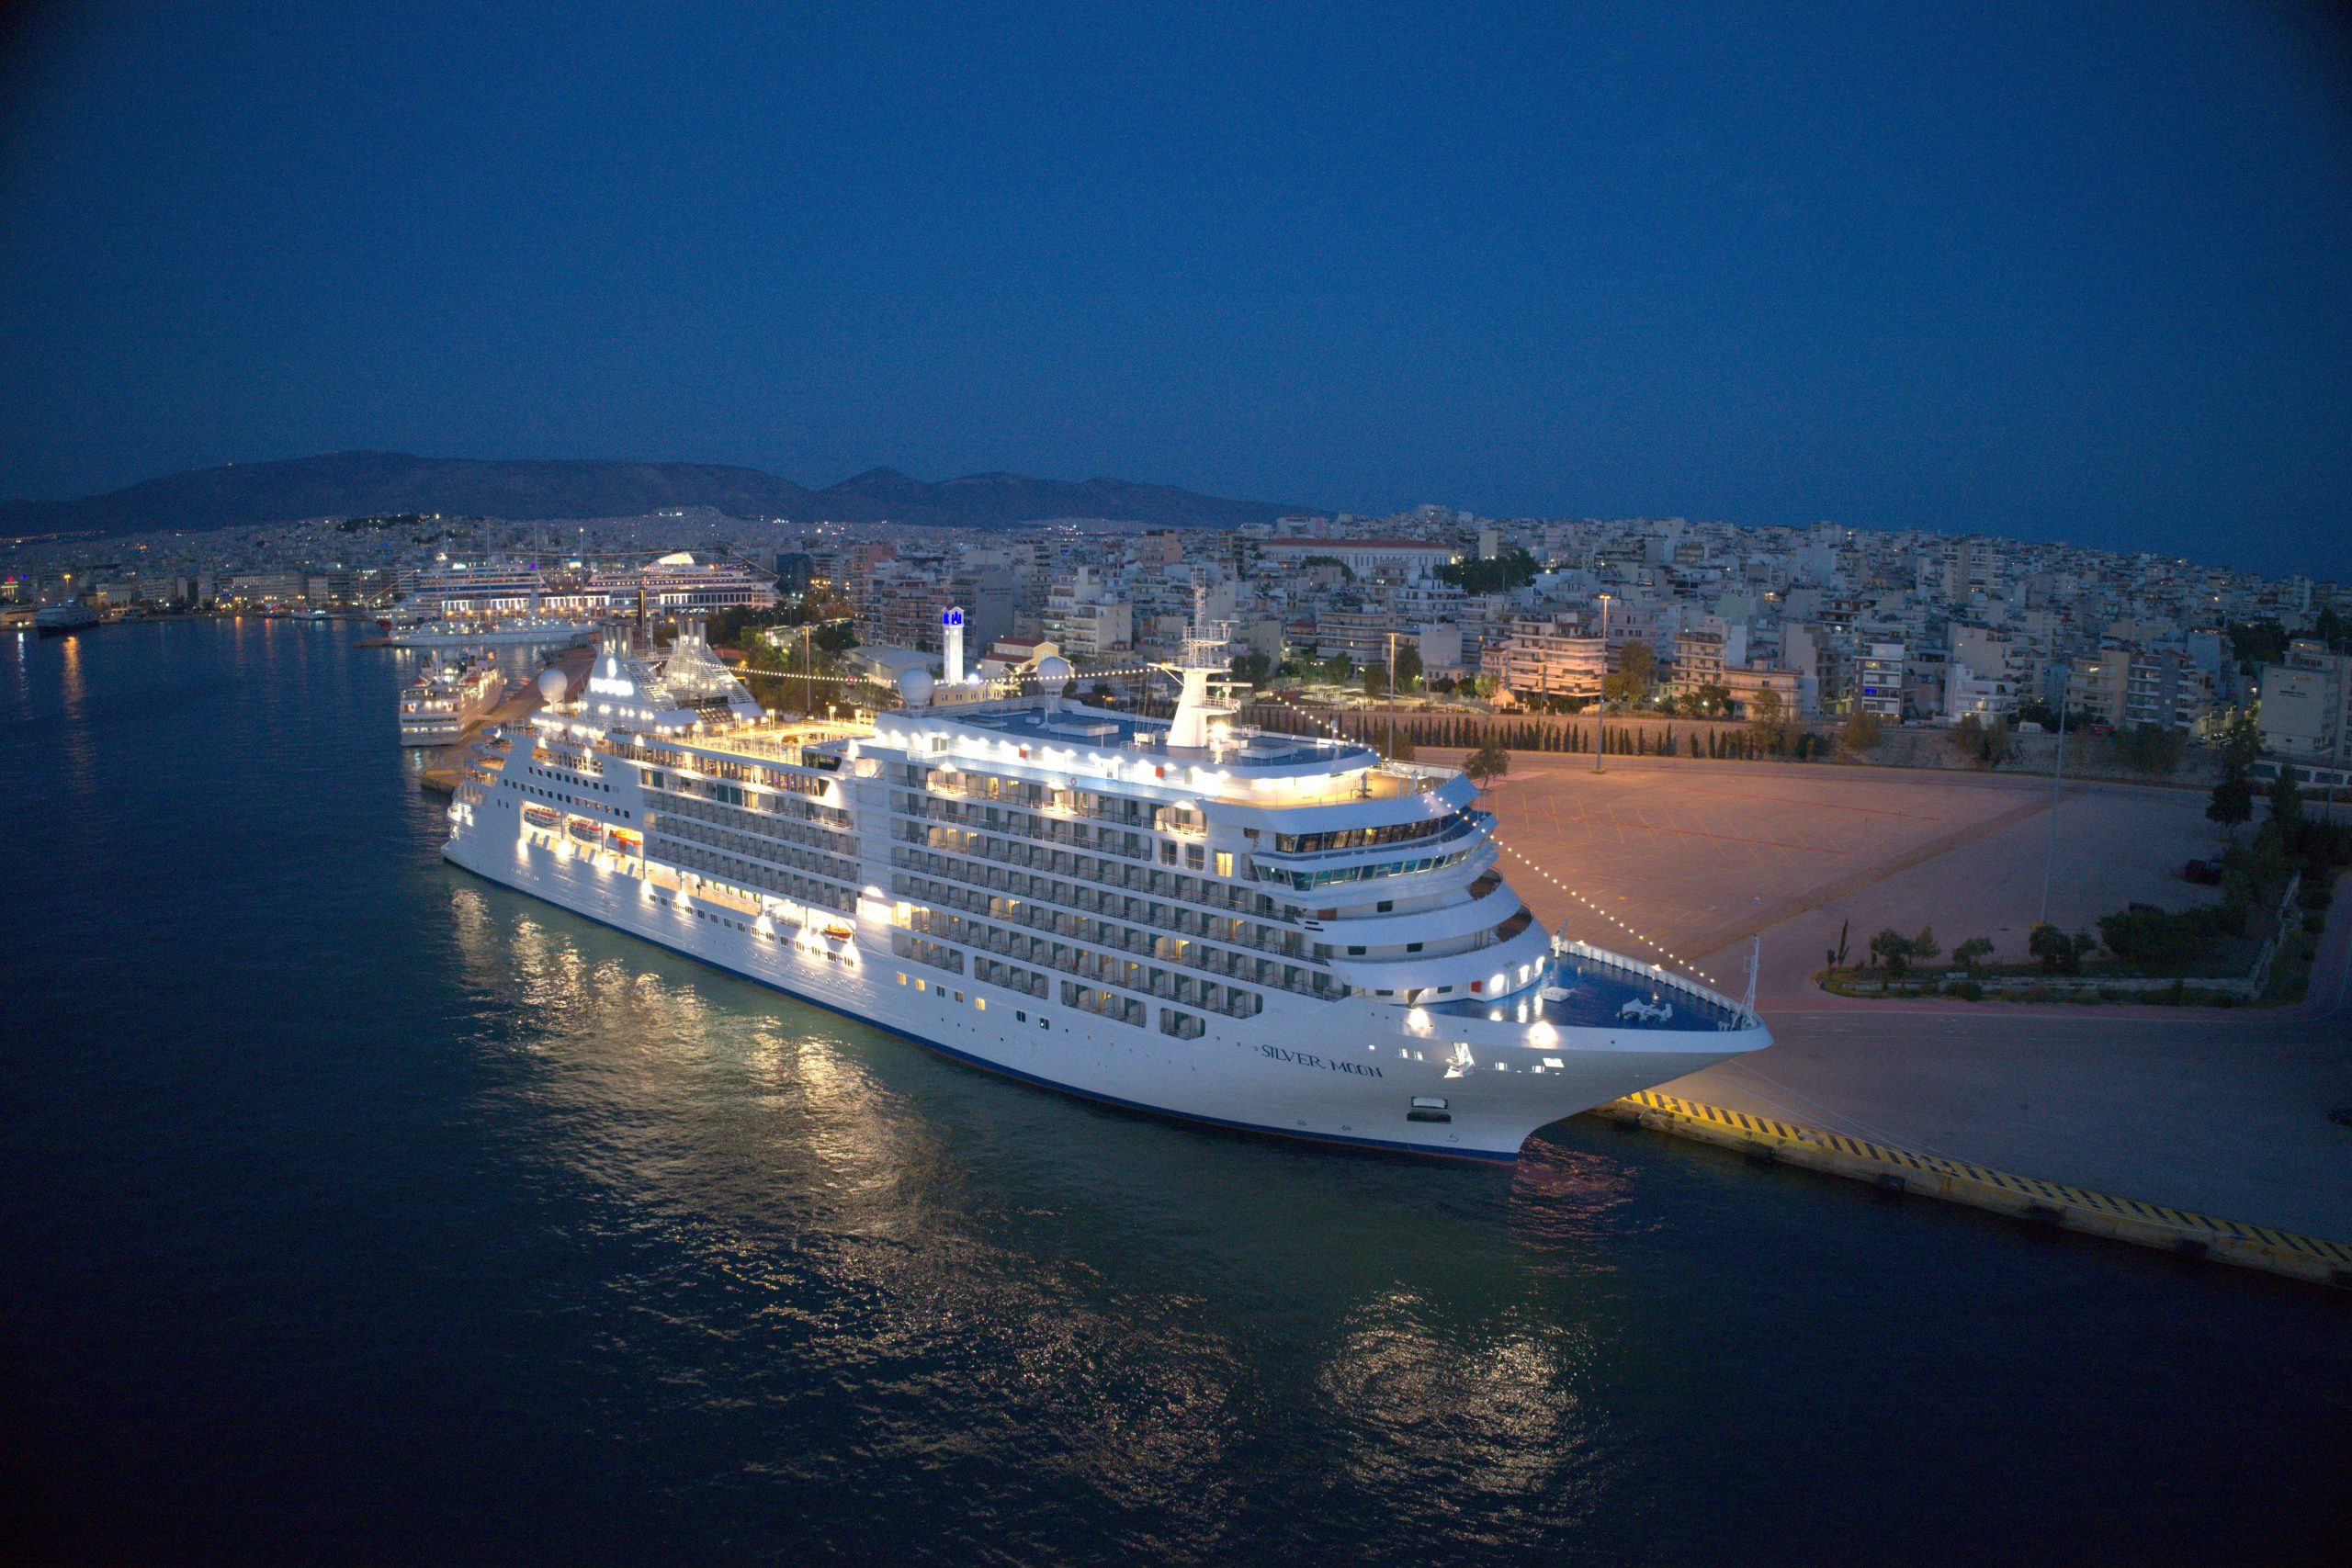 President of Royal Carribean Cruises: Greek government backs world cruise industry